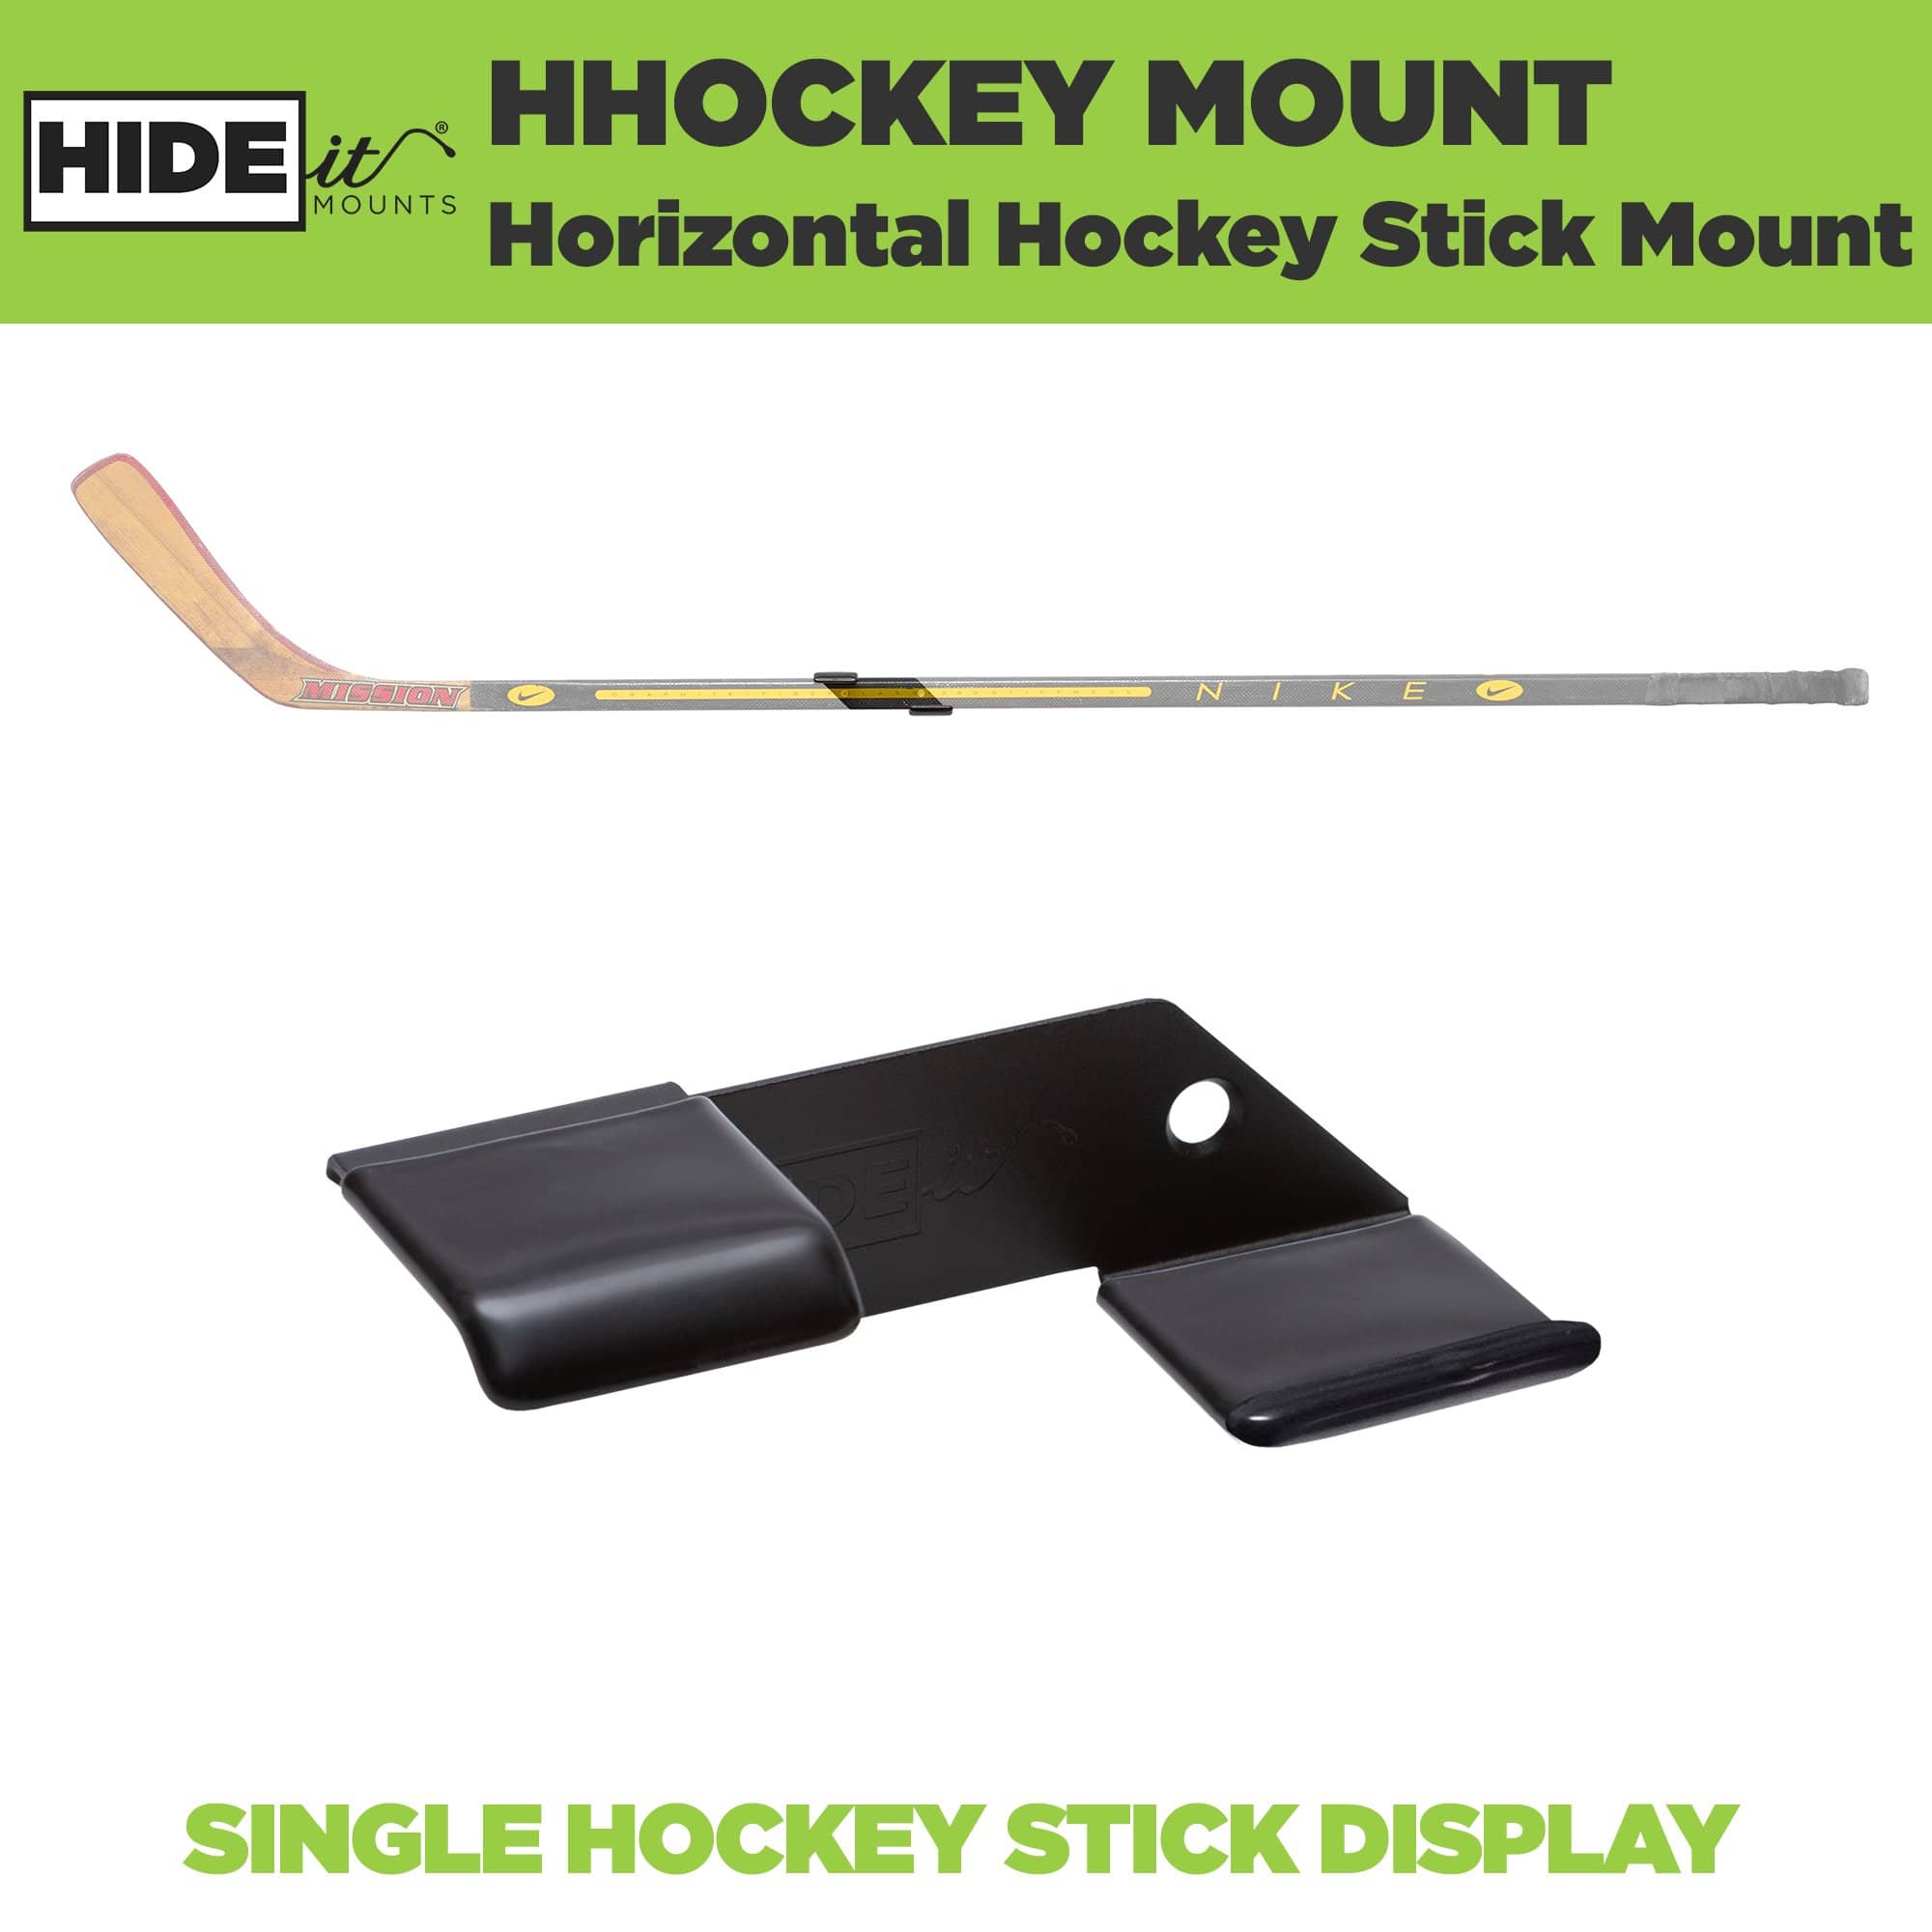 Empty HIDEit Horizontal Hockey Stick Mount shown with hockey stick greyed out above. Perfect to display one hockey stick horizontally.